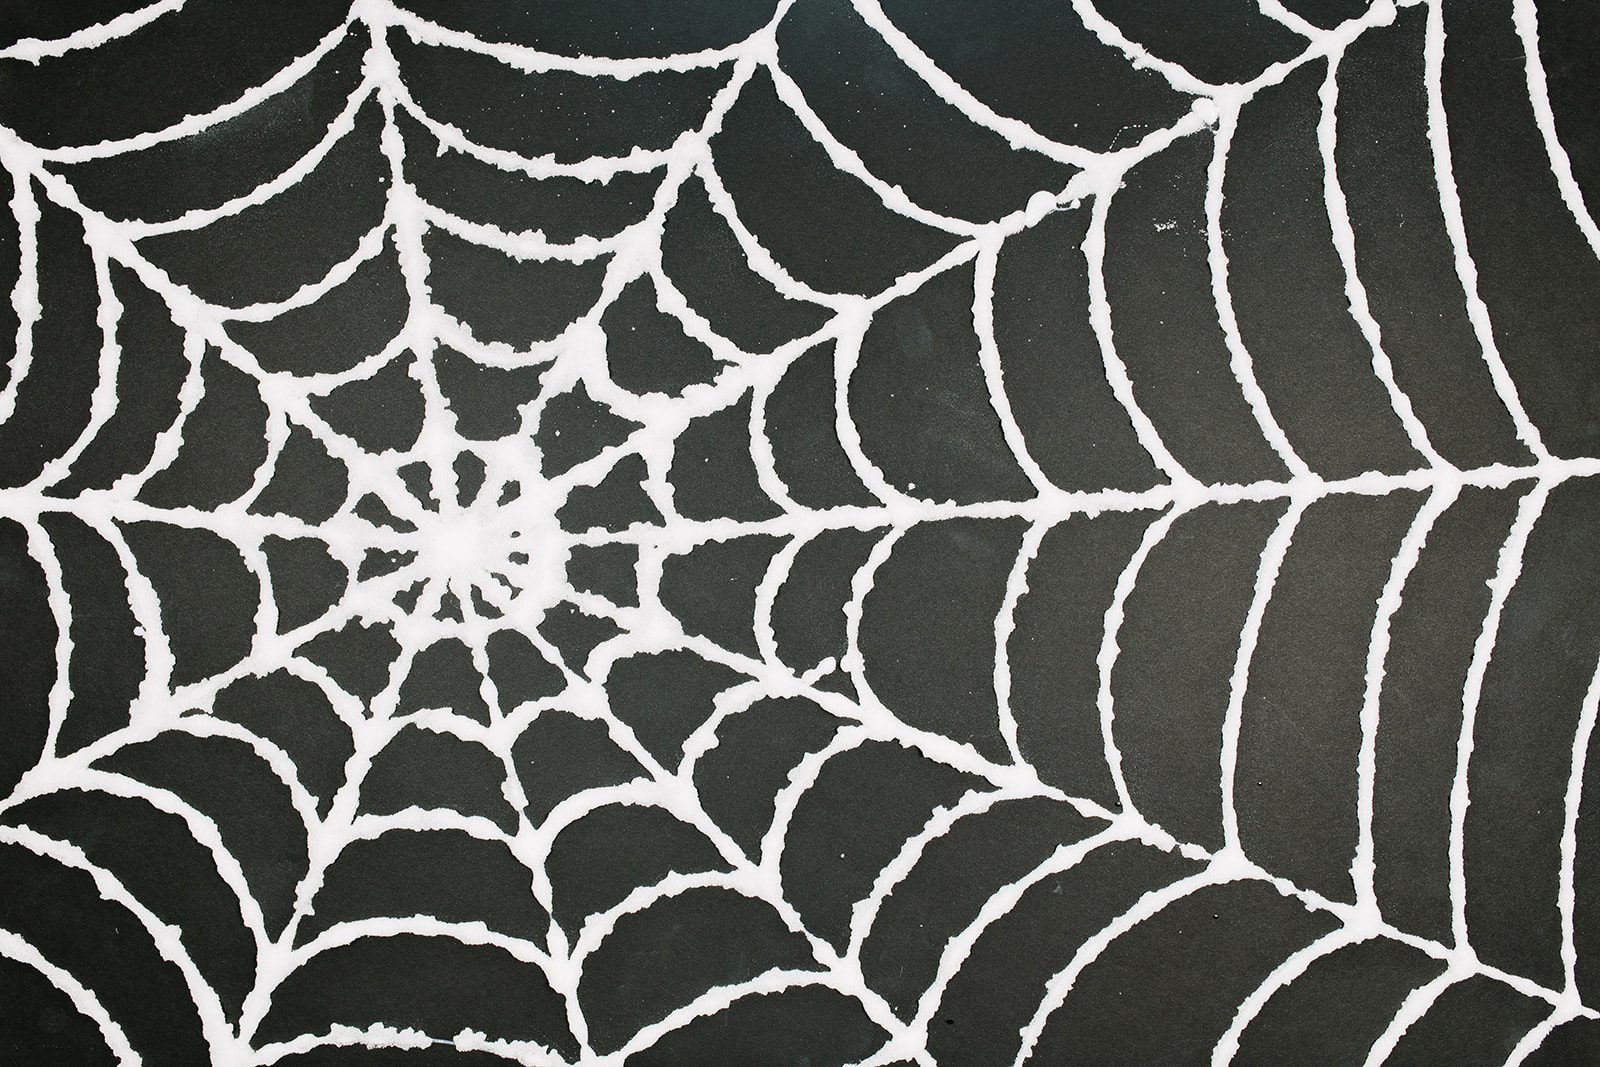 Salt Painted Spiderweb - The Best Ideas for Kids